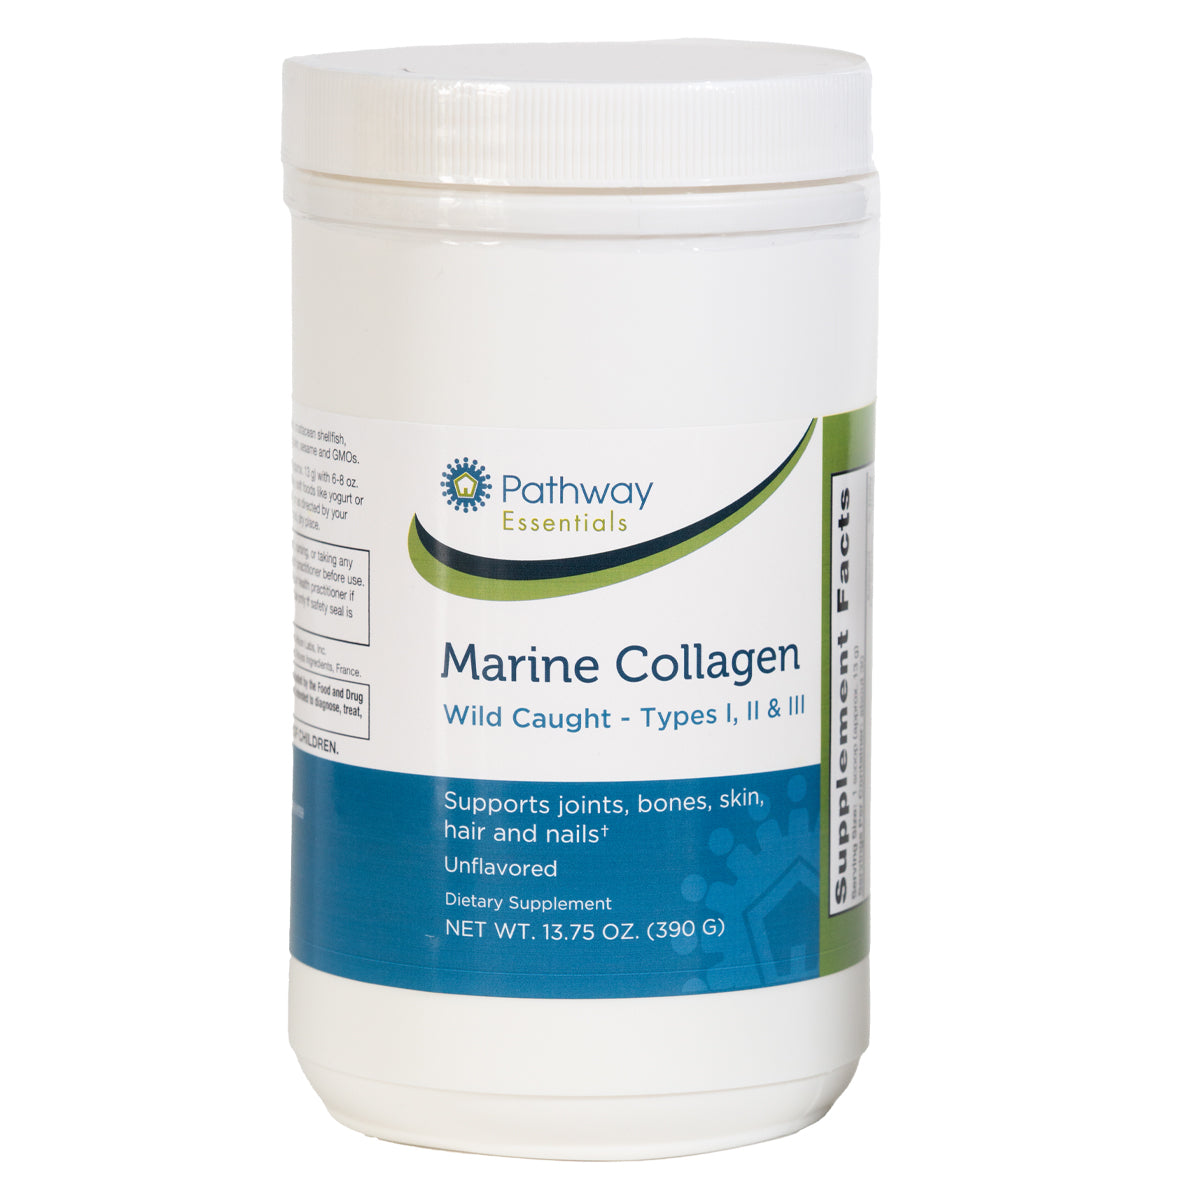 Marine Collagen - Wild Caught - Types I, II & III